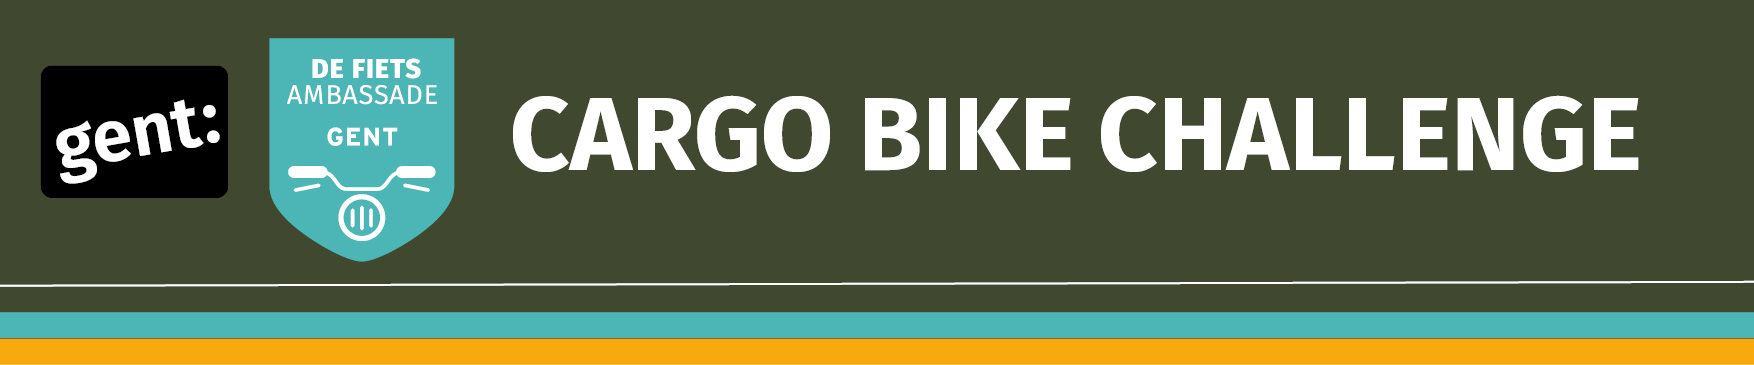 Cargo bike challenge